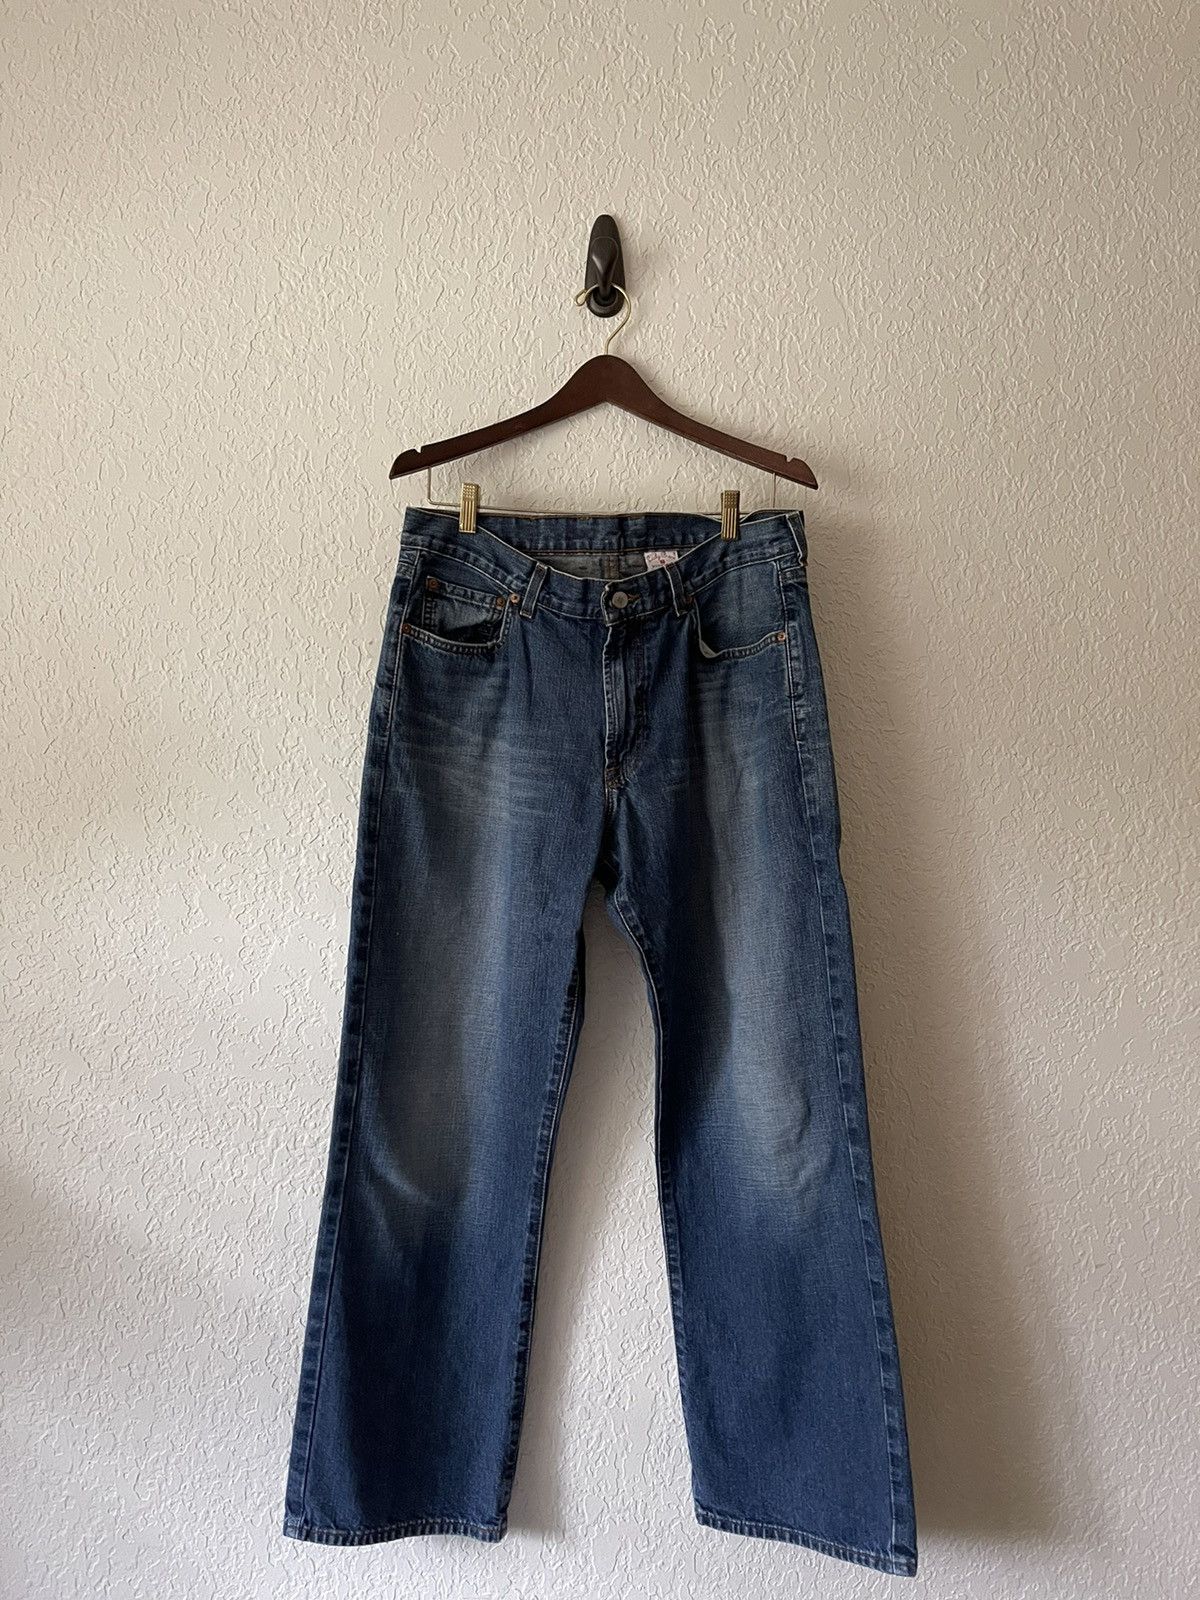 Vintage Lucky Brand Vintage Dungarees Denim Jeans Size US 34 / EU 50 - 1 Preview